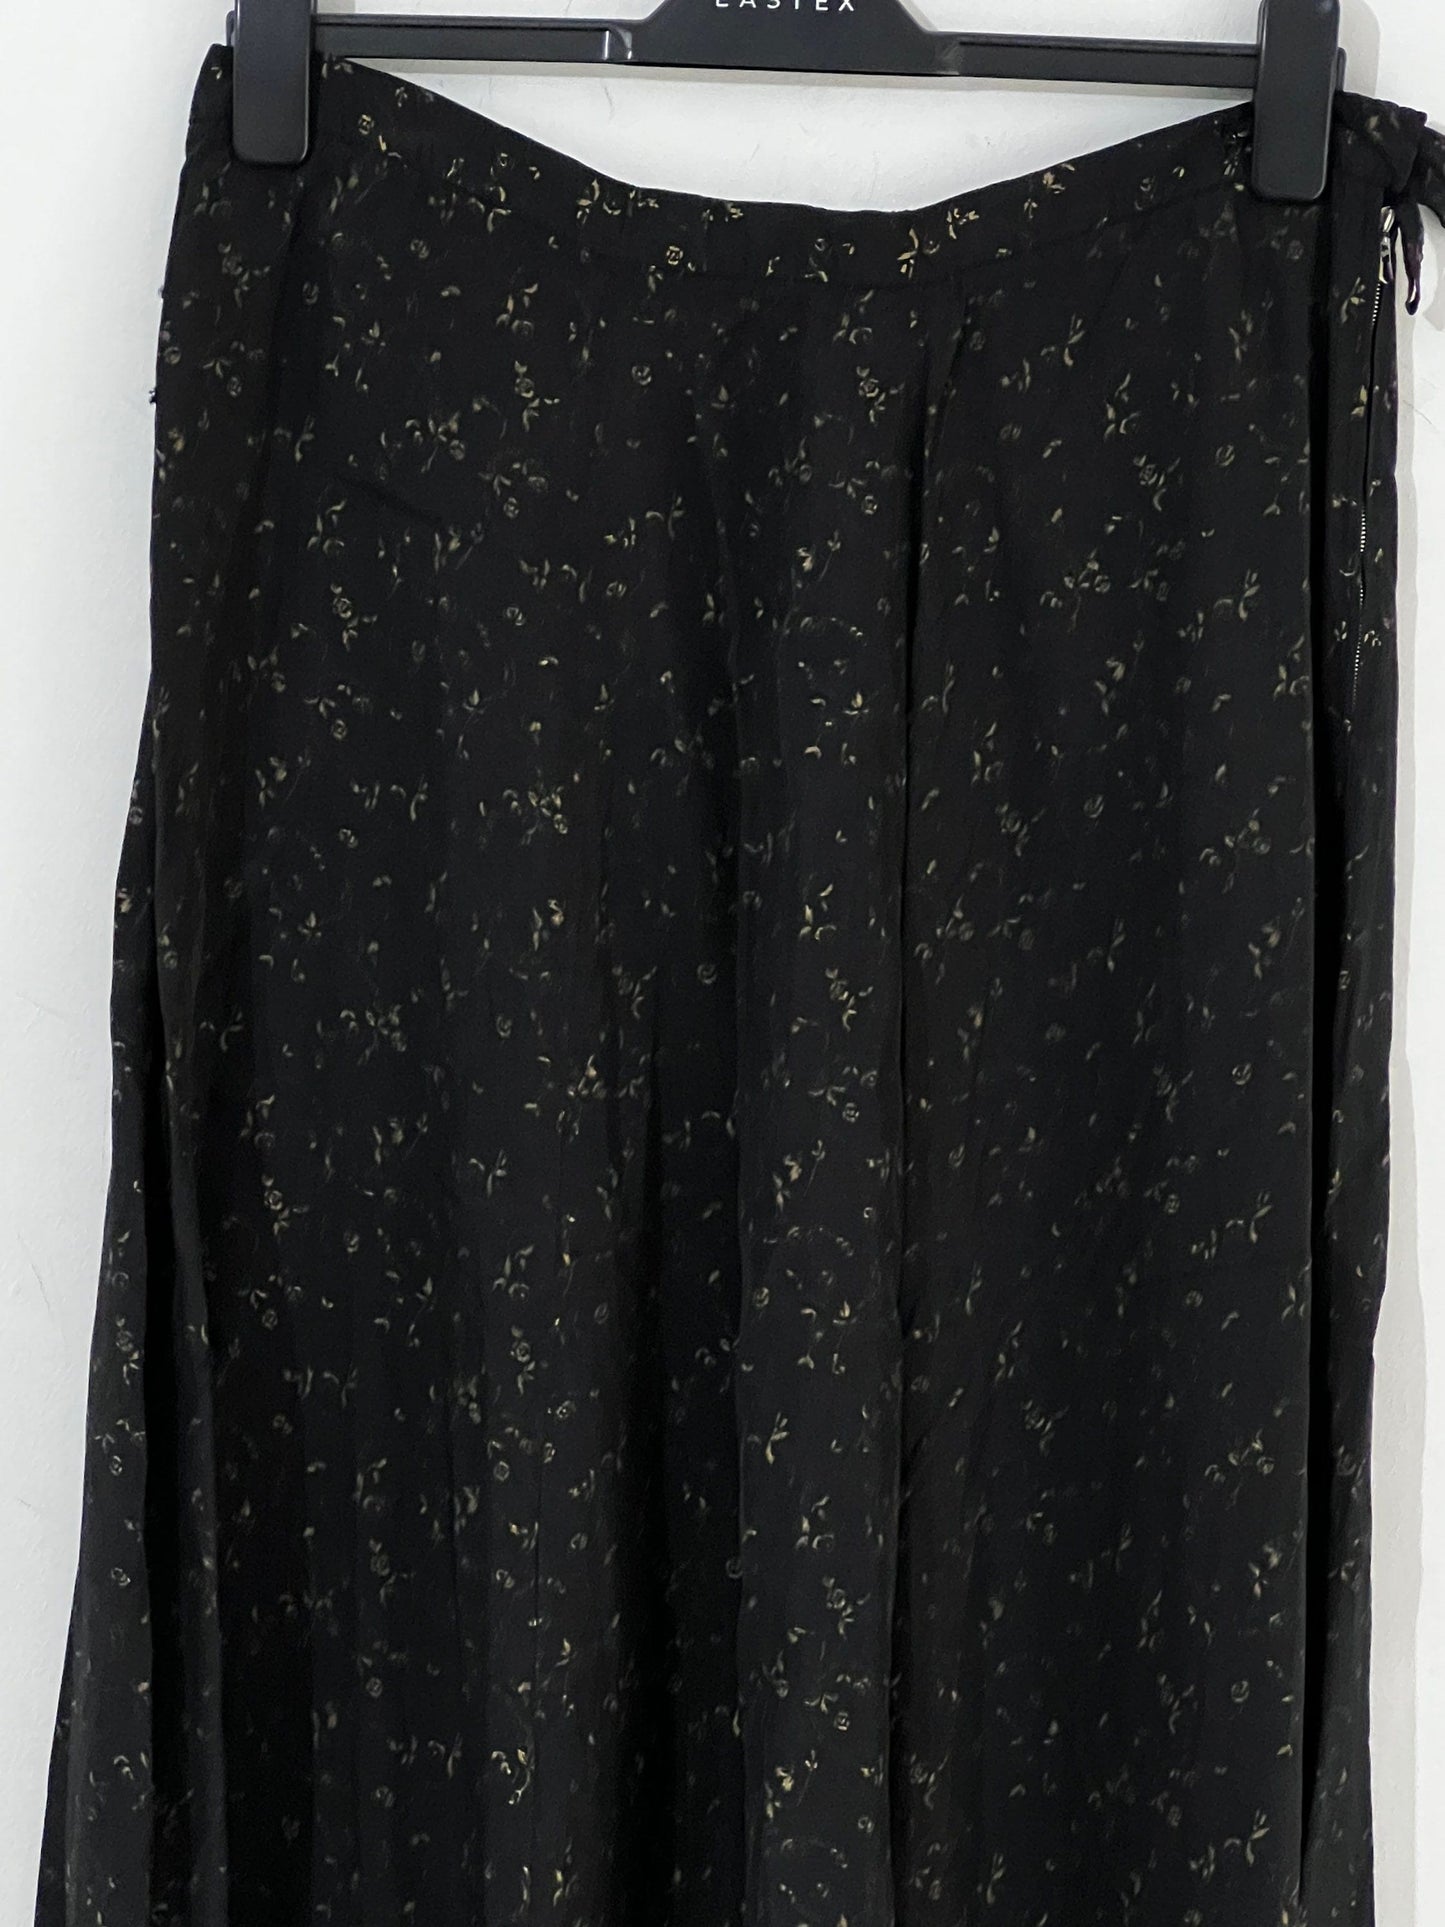 Vintage Maxi Skirt Muted Gold Black Floral Skirt Ankle Length UK Size 14